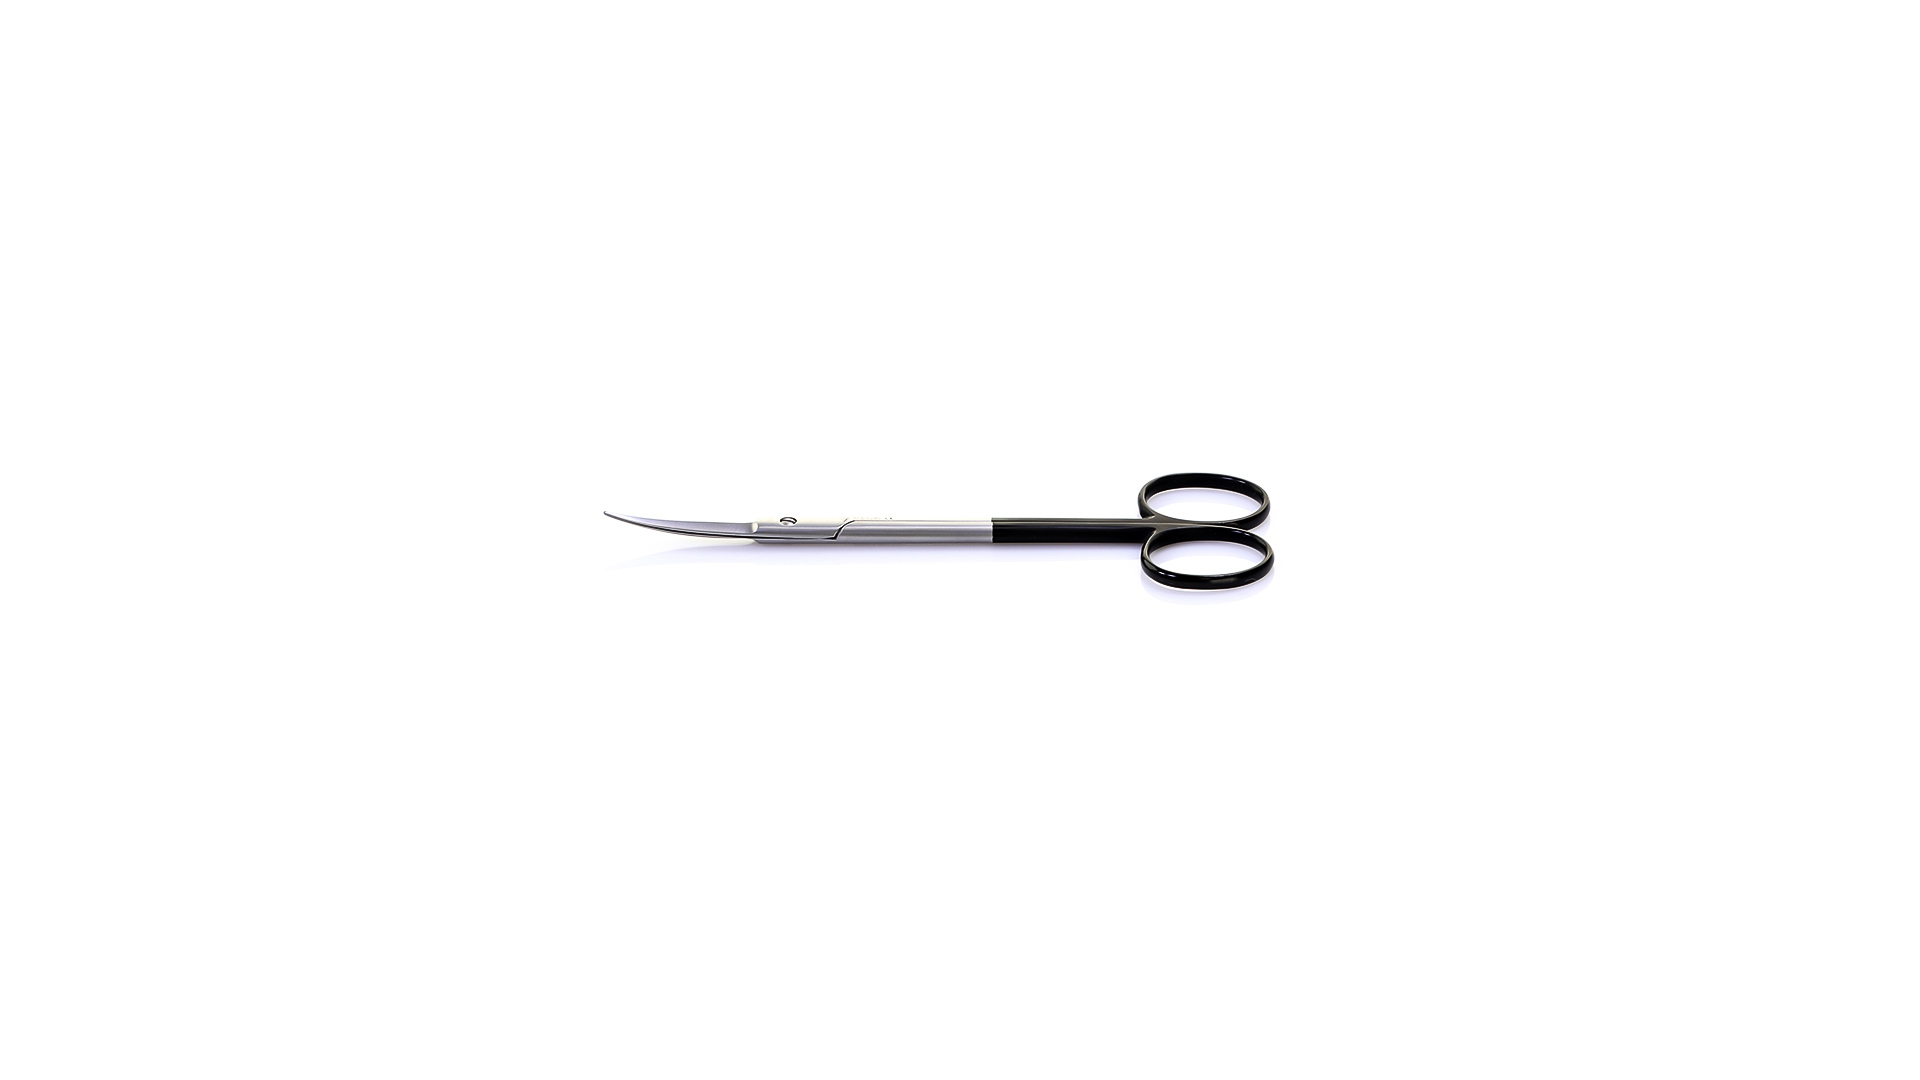 Joseph scissors, 5 1/2'',curved double-edge blades, sharp tips, ring handle